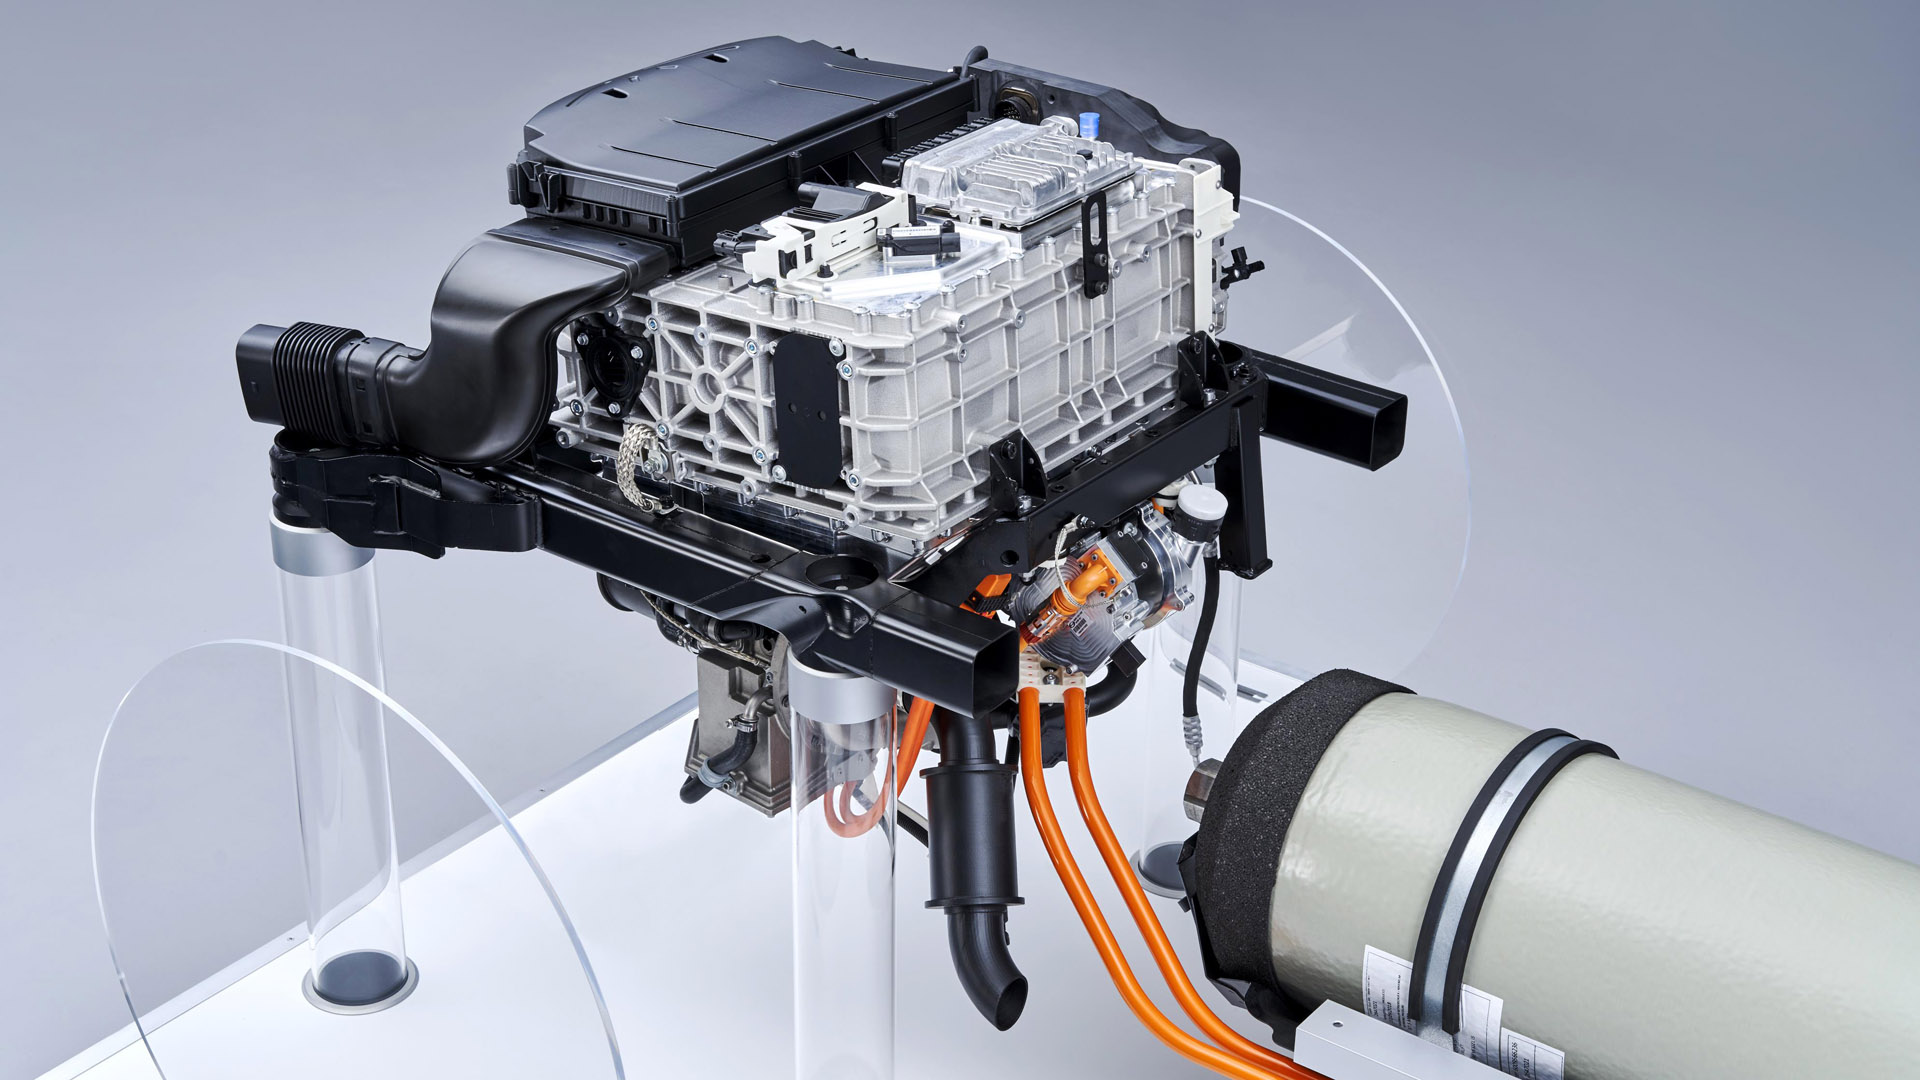 BMW hydrogen fuel cell powertrain back